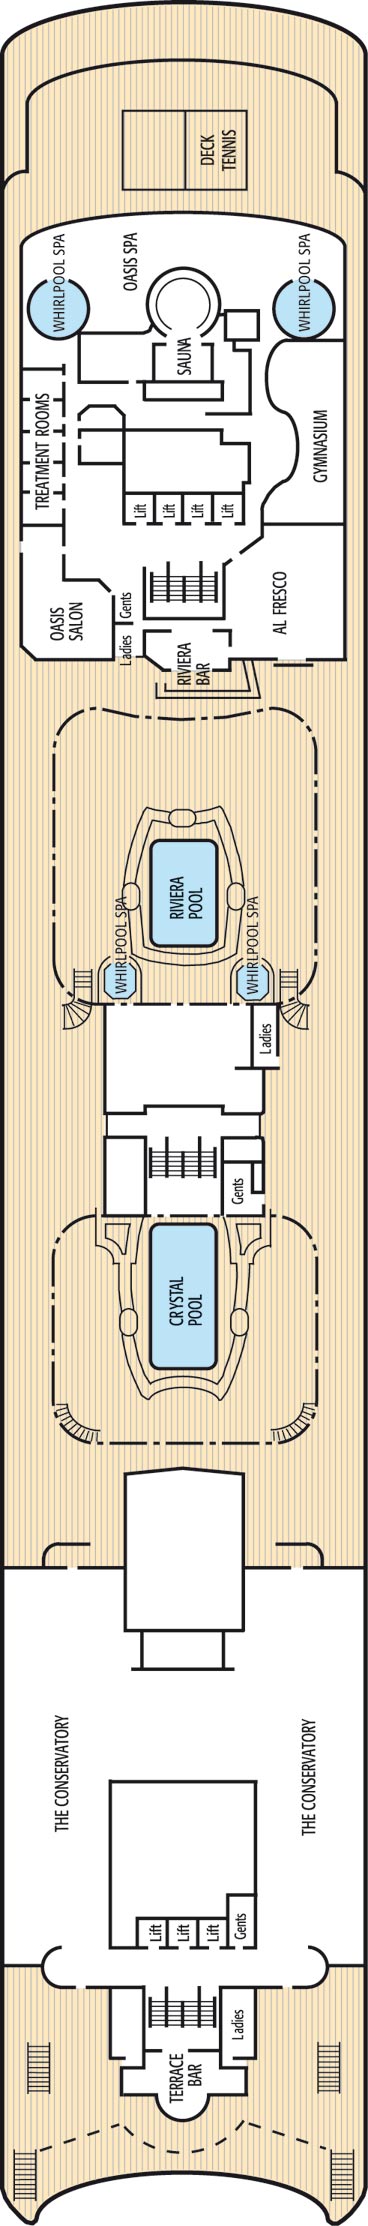 LIDO DECK Deck Plan